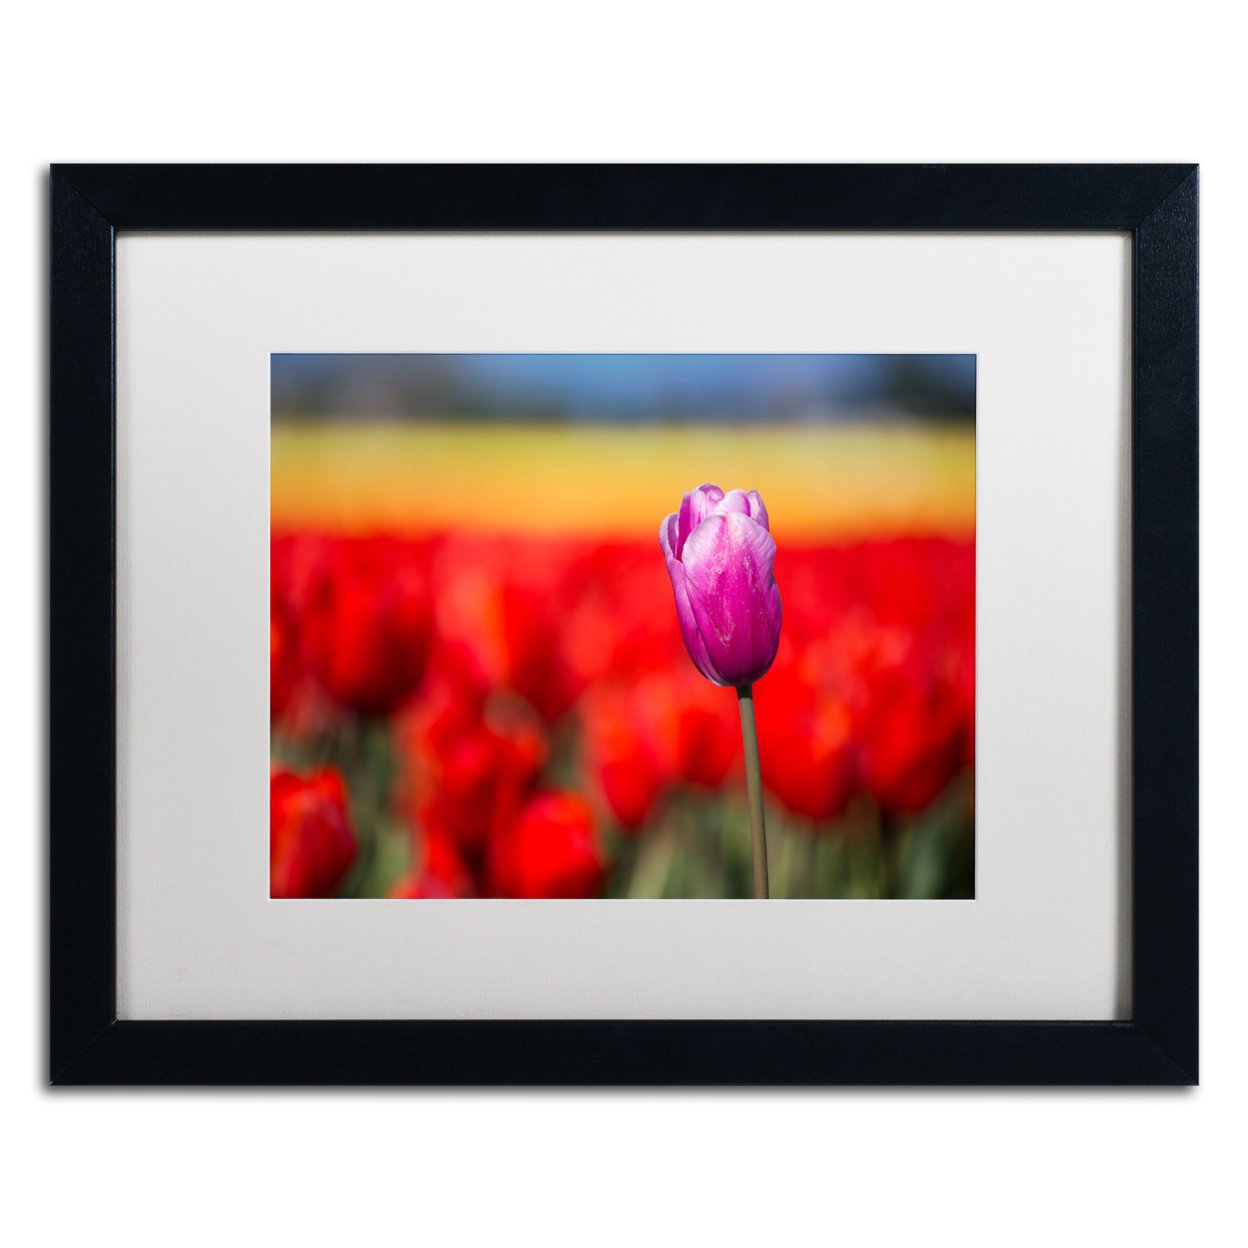 Pierre Leclerc 'Purple Tulip' Black Wooden Framed Art 18 X 22 Inches